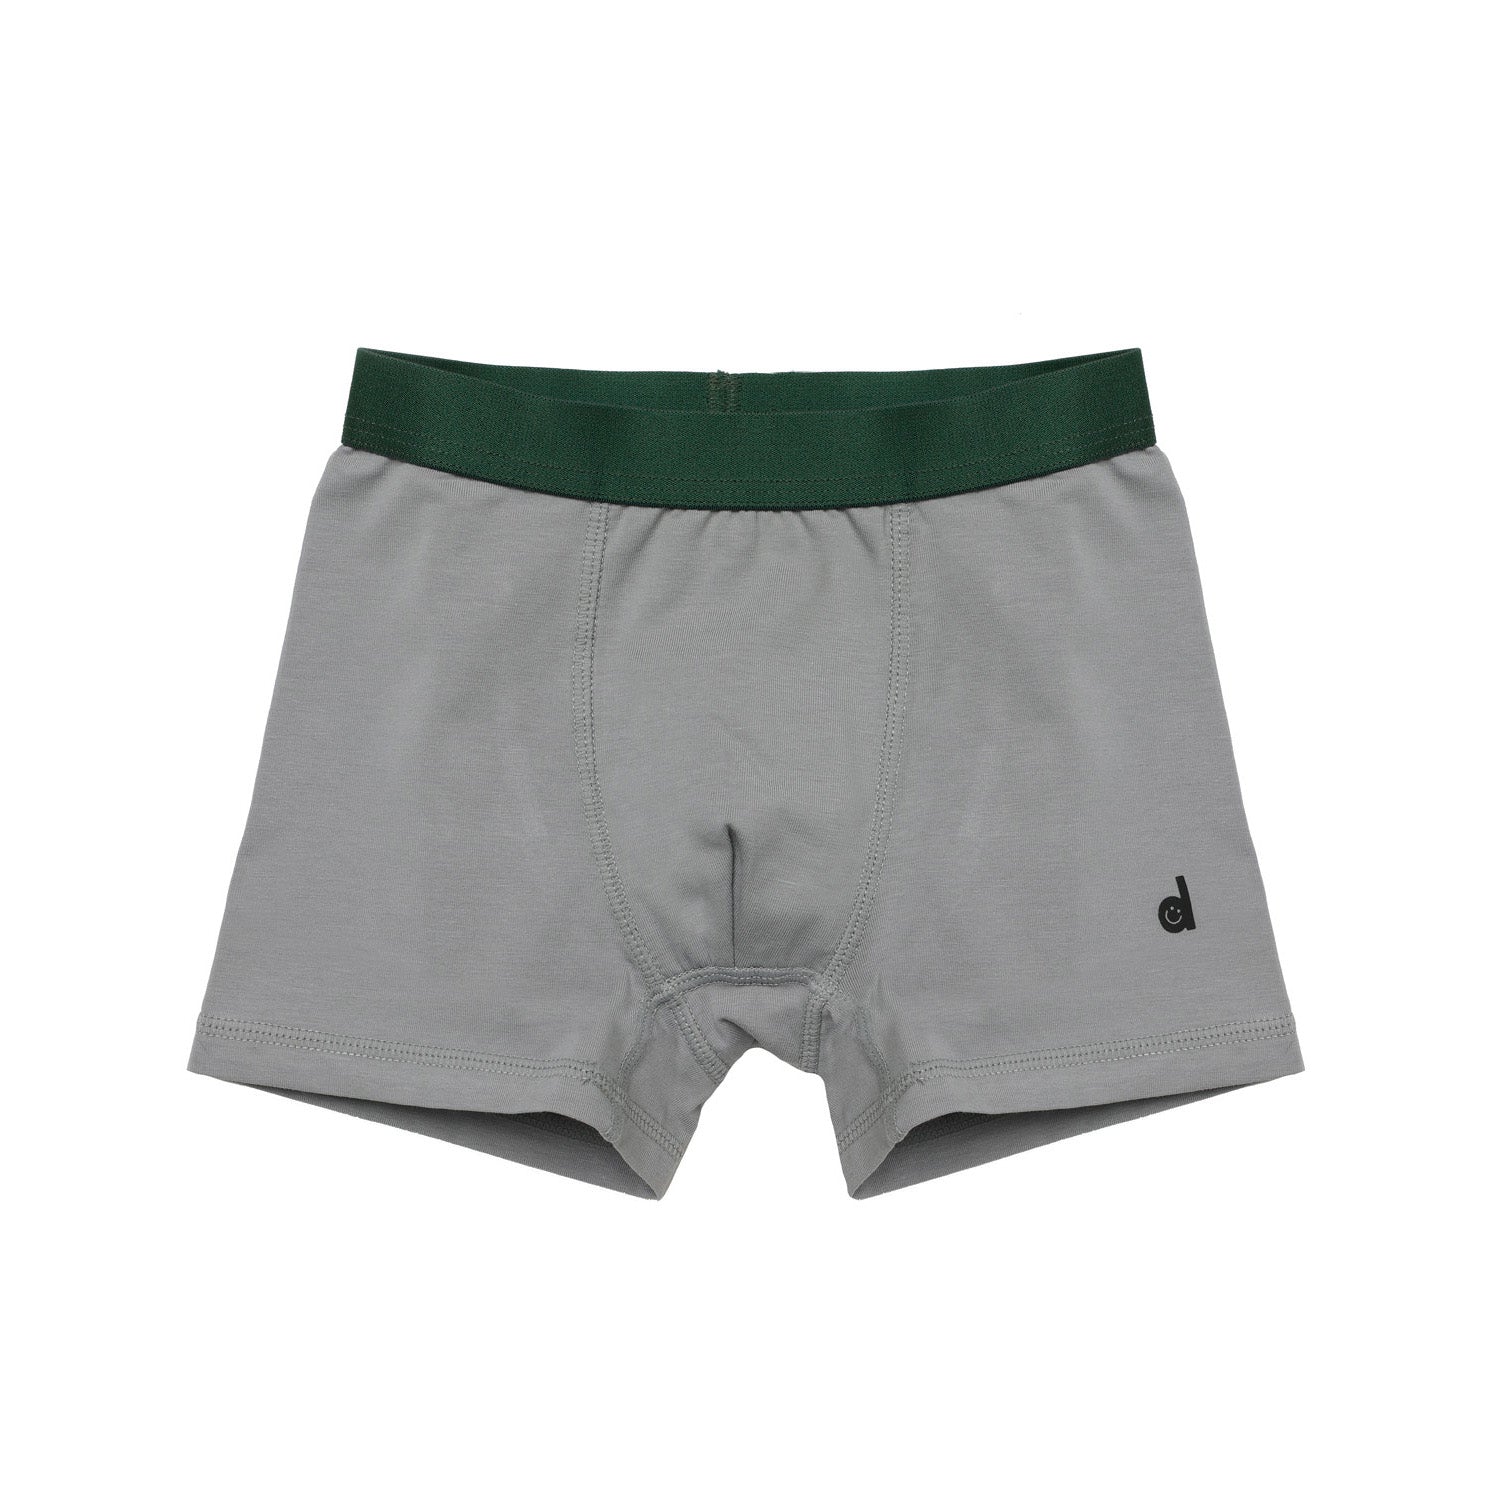 Boys Underwear Single Pair – Drawers Clothing